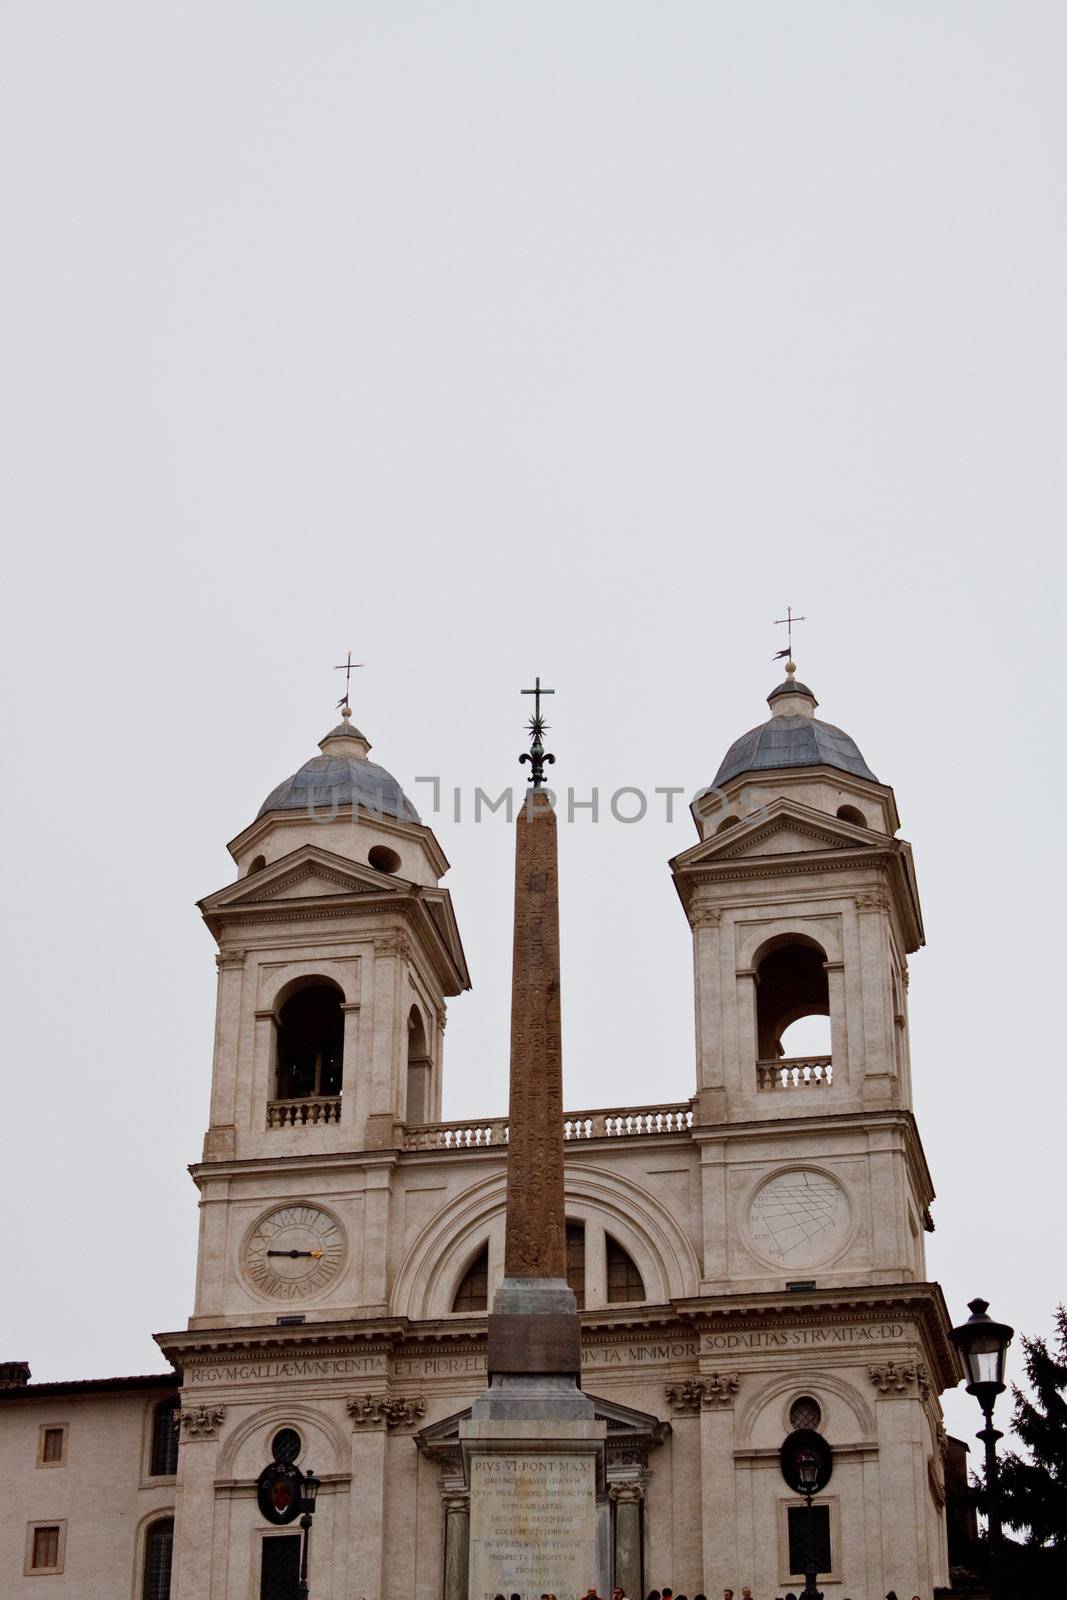 Trinita' of Monti, famous church in Rome, Italy